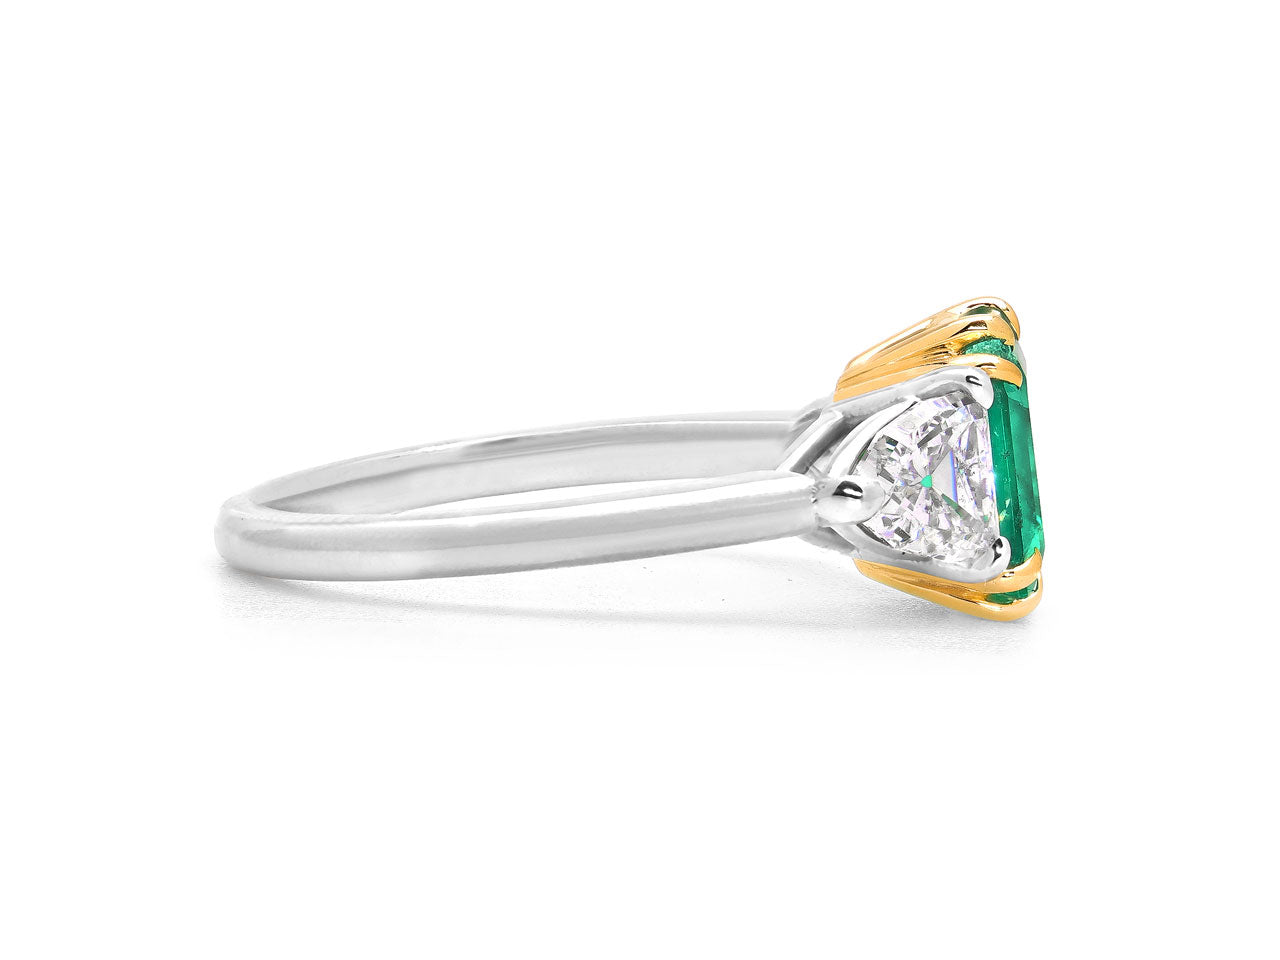 Beladora 'Bespoke' Emerald and Diamond Ring in Platinum and 18K Gold